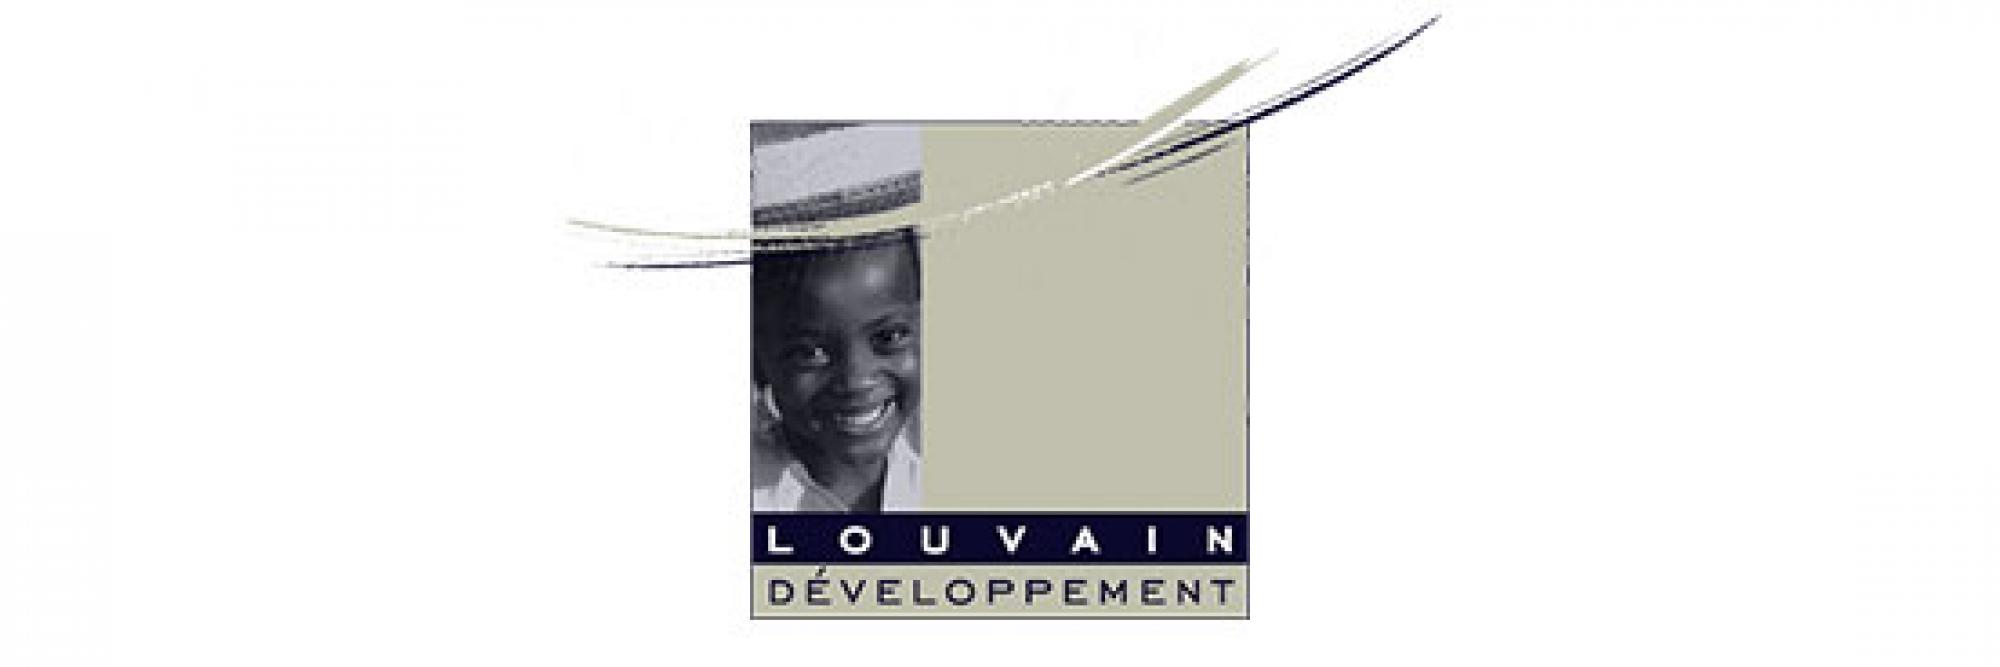 logo LD